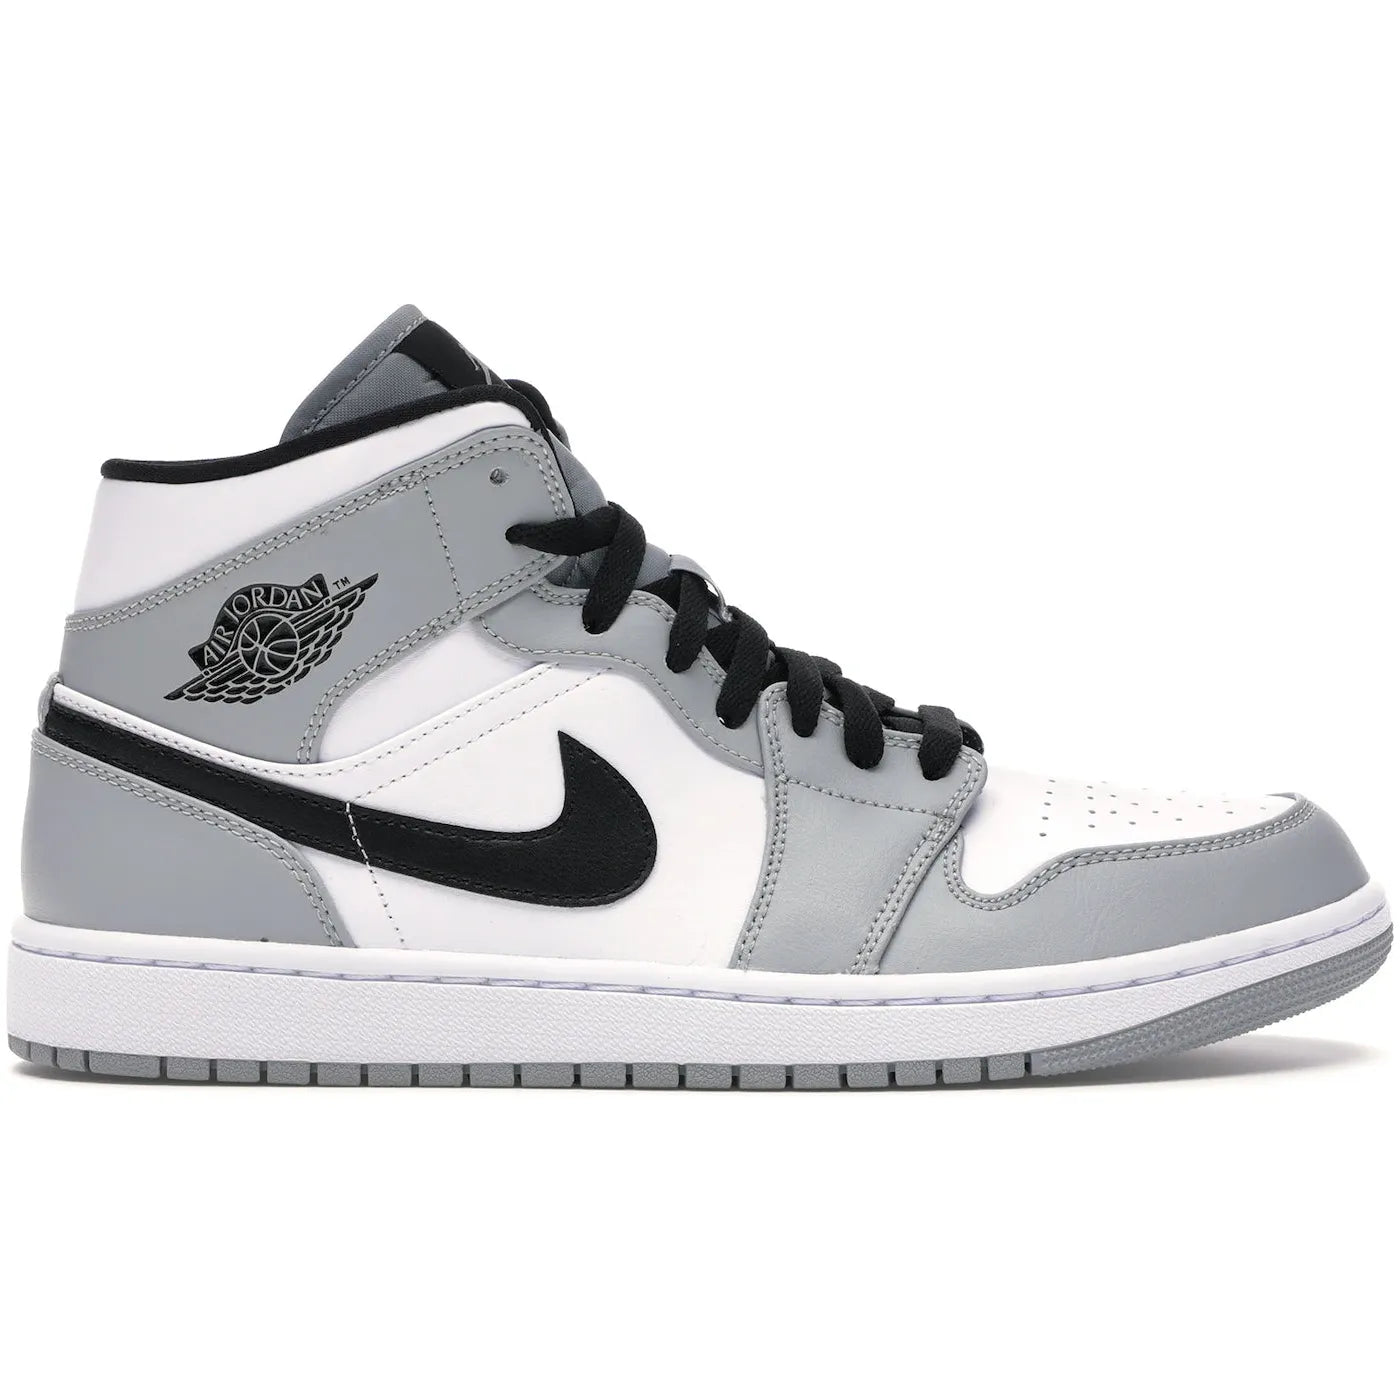 [SOTW] Nike - Jordan 1 Mid Smoke Grey